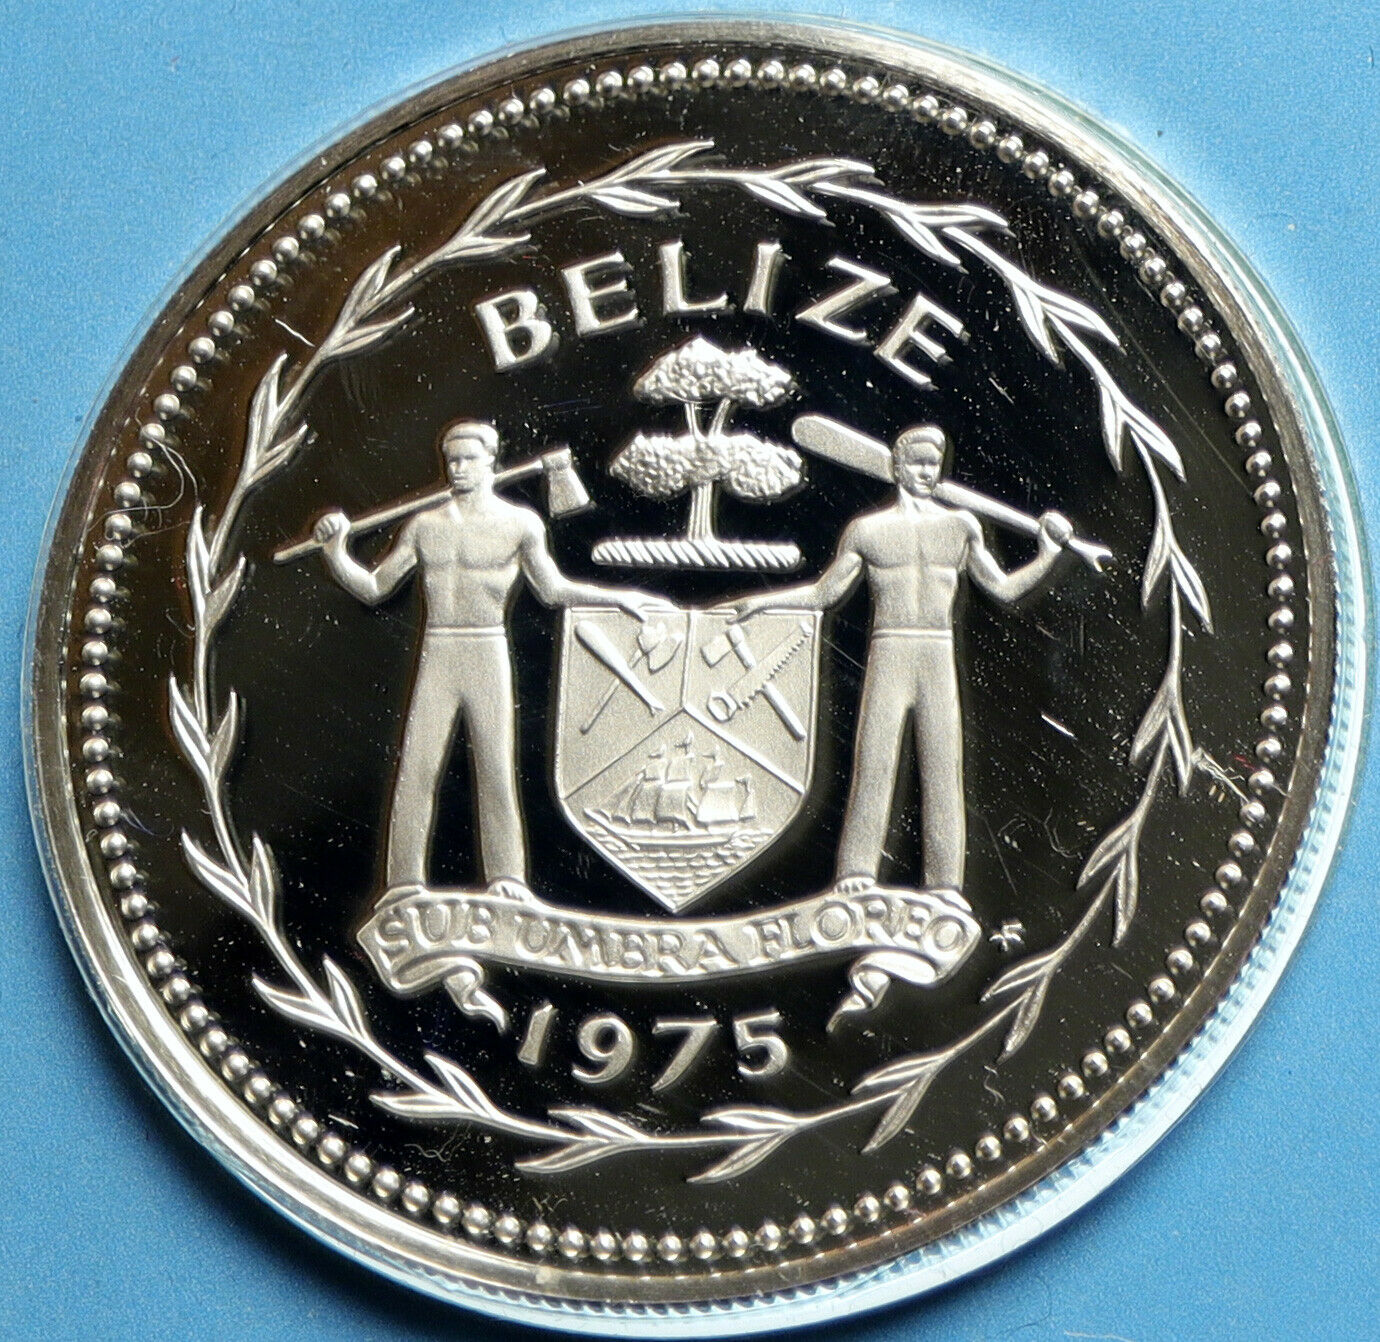 1975 BELIZE Avifauna Toucan BIRD Antique VINTAGE Proof Silver $5 Coin i103960